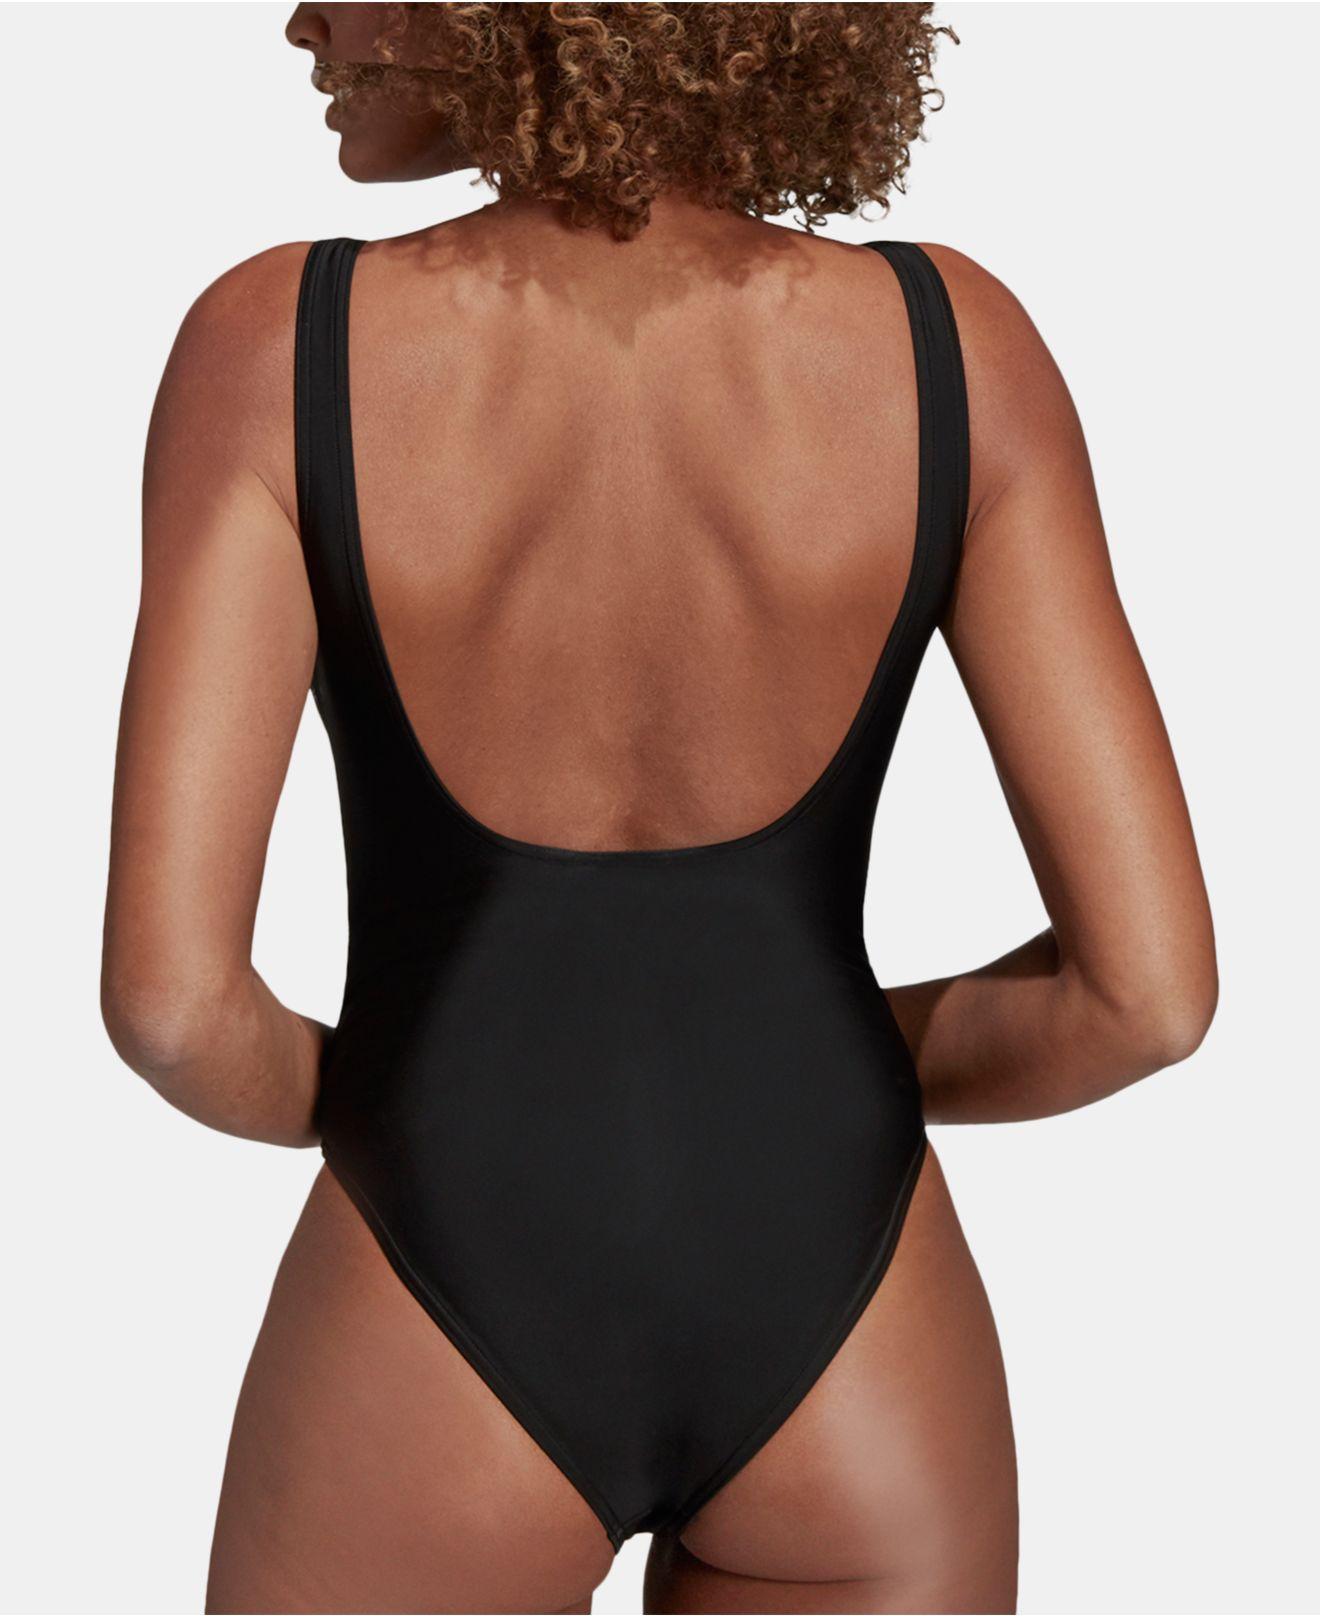 adidas Originals Trefoil One Piece Swimsuit in Black | Lyst